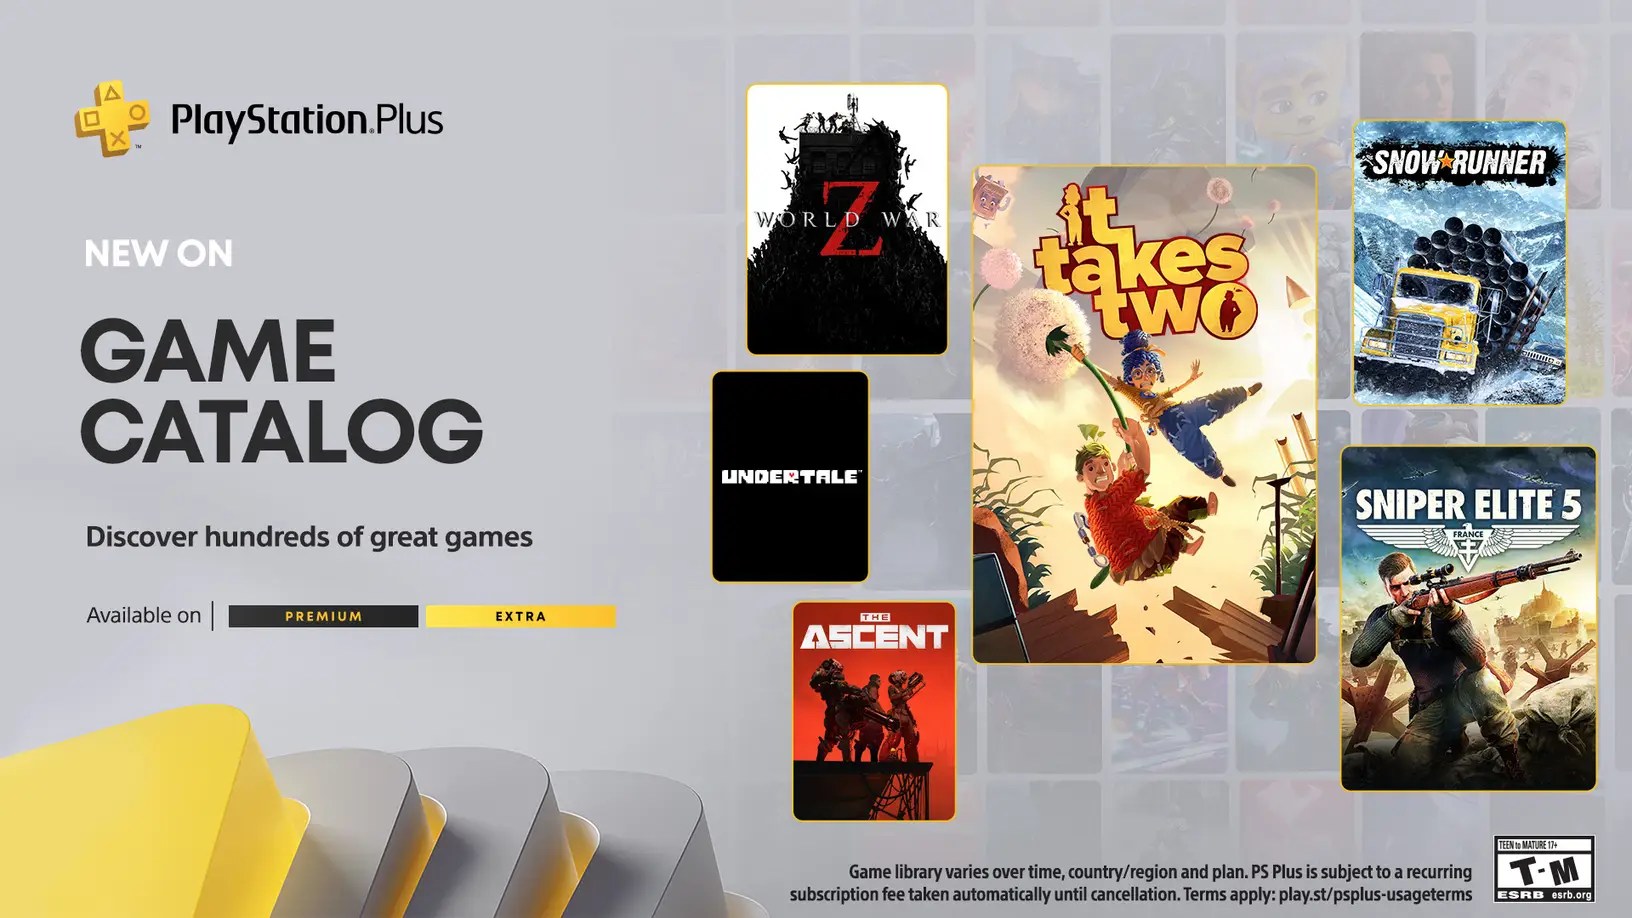 PlayStation Plus gets worldwide price increase in September